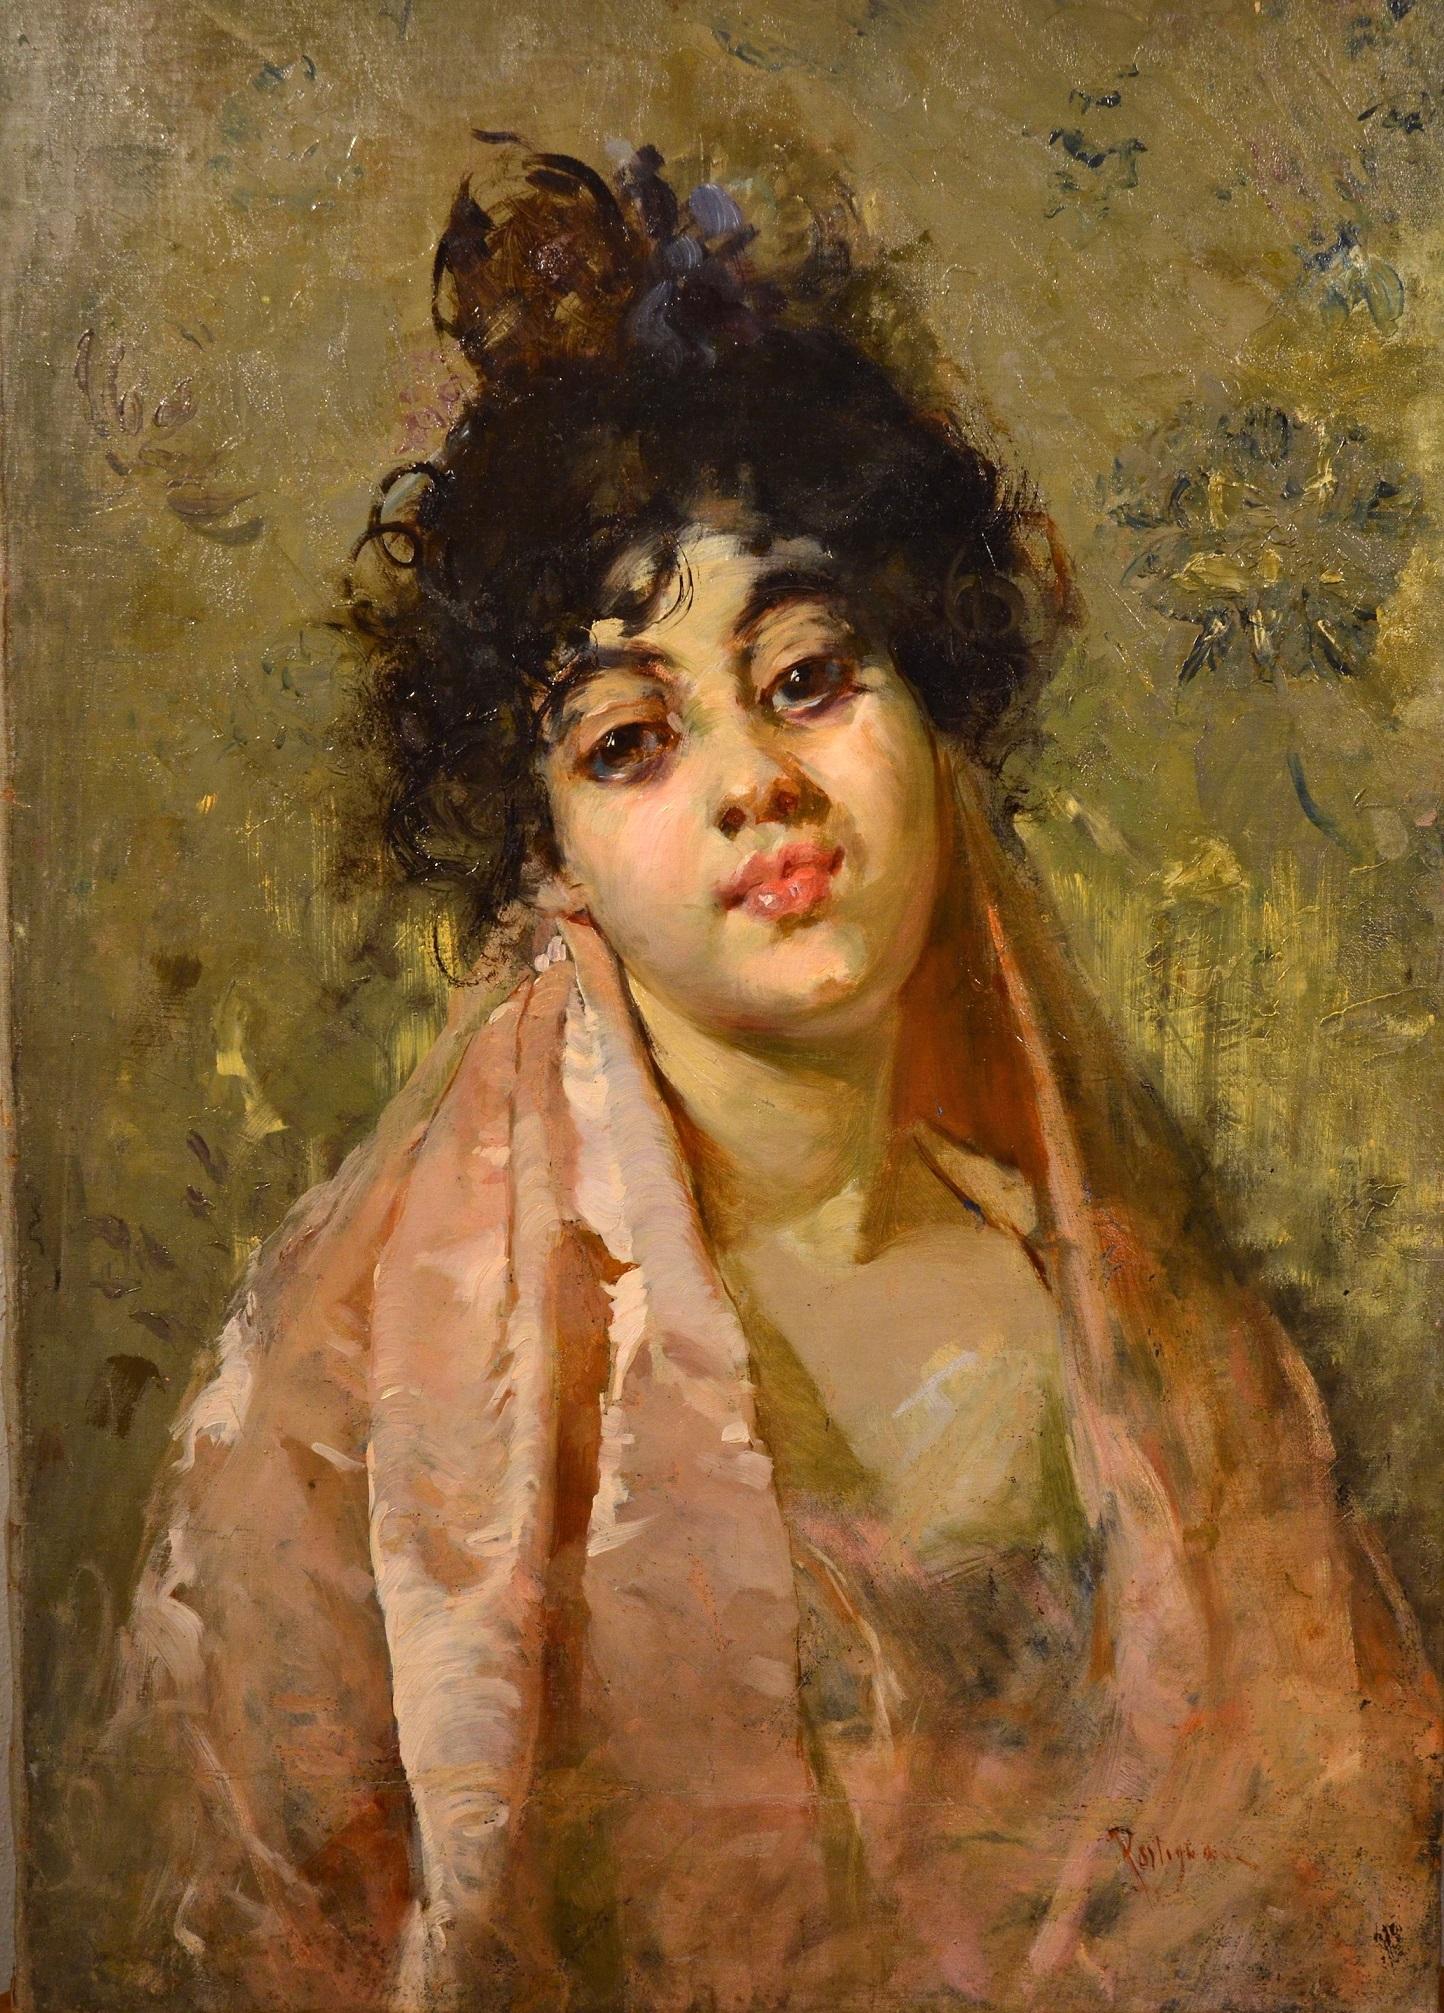 Salvatore Postiglione) Paint Oil on canvas Signed Portrait Woman Impressionism 1